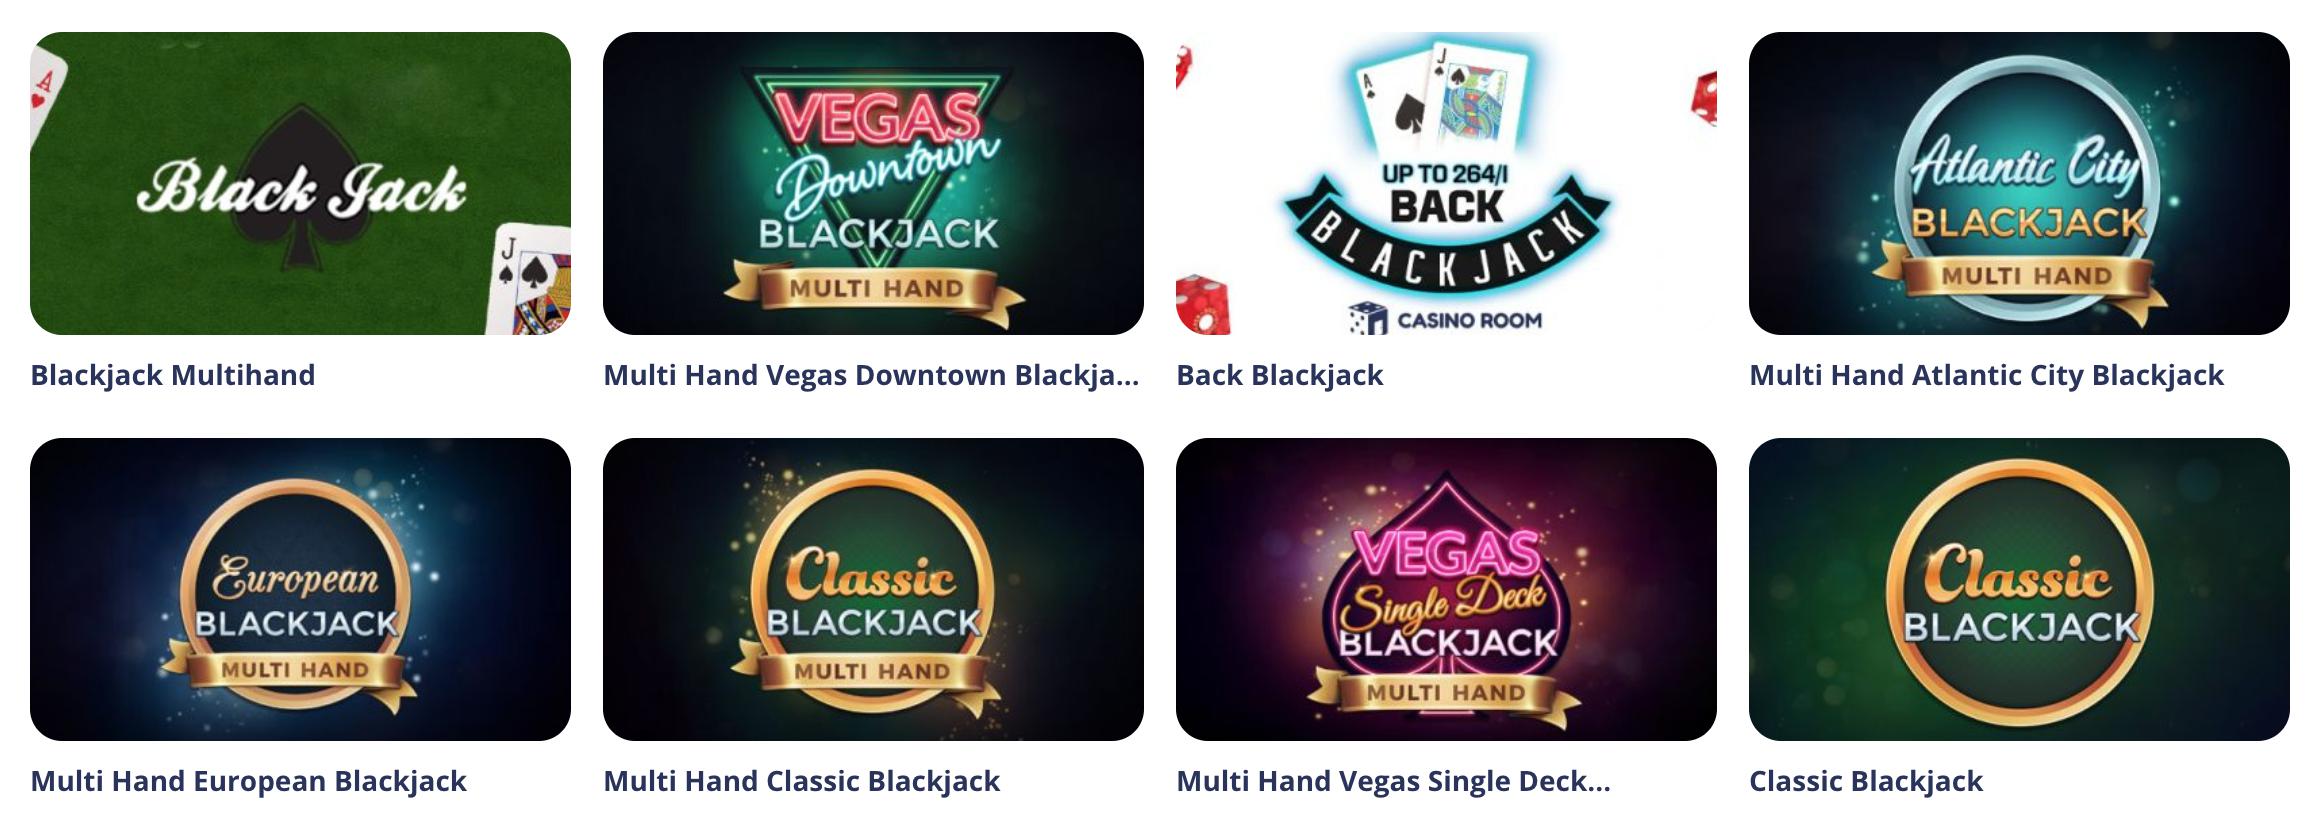 Casino Room BlackJack